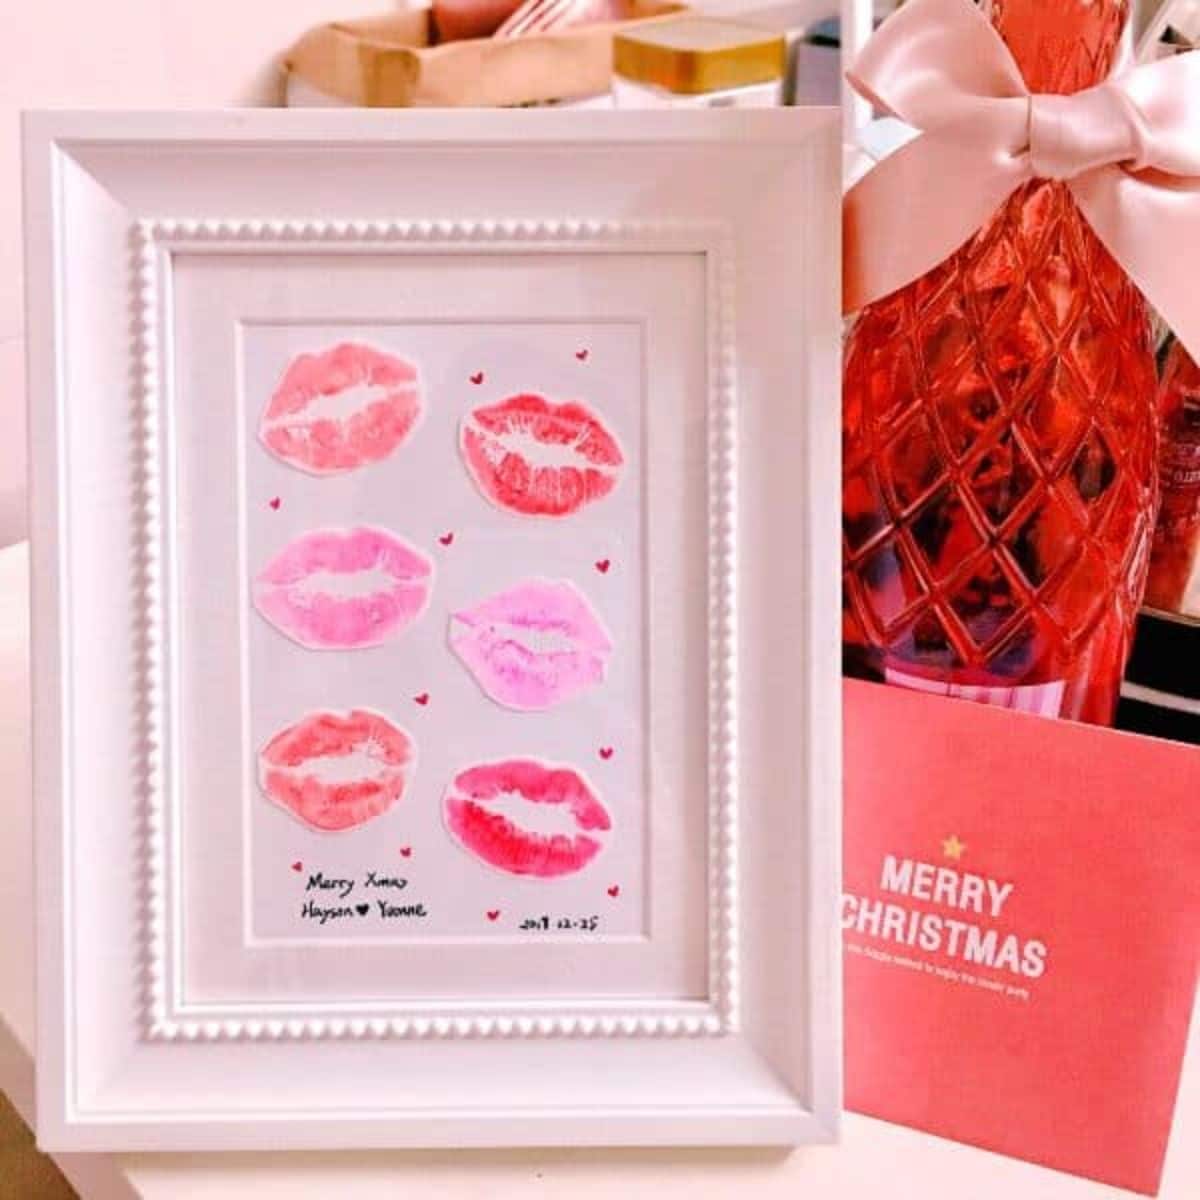 The Kiss Print – Easy DIY Wall Art Gift for Him